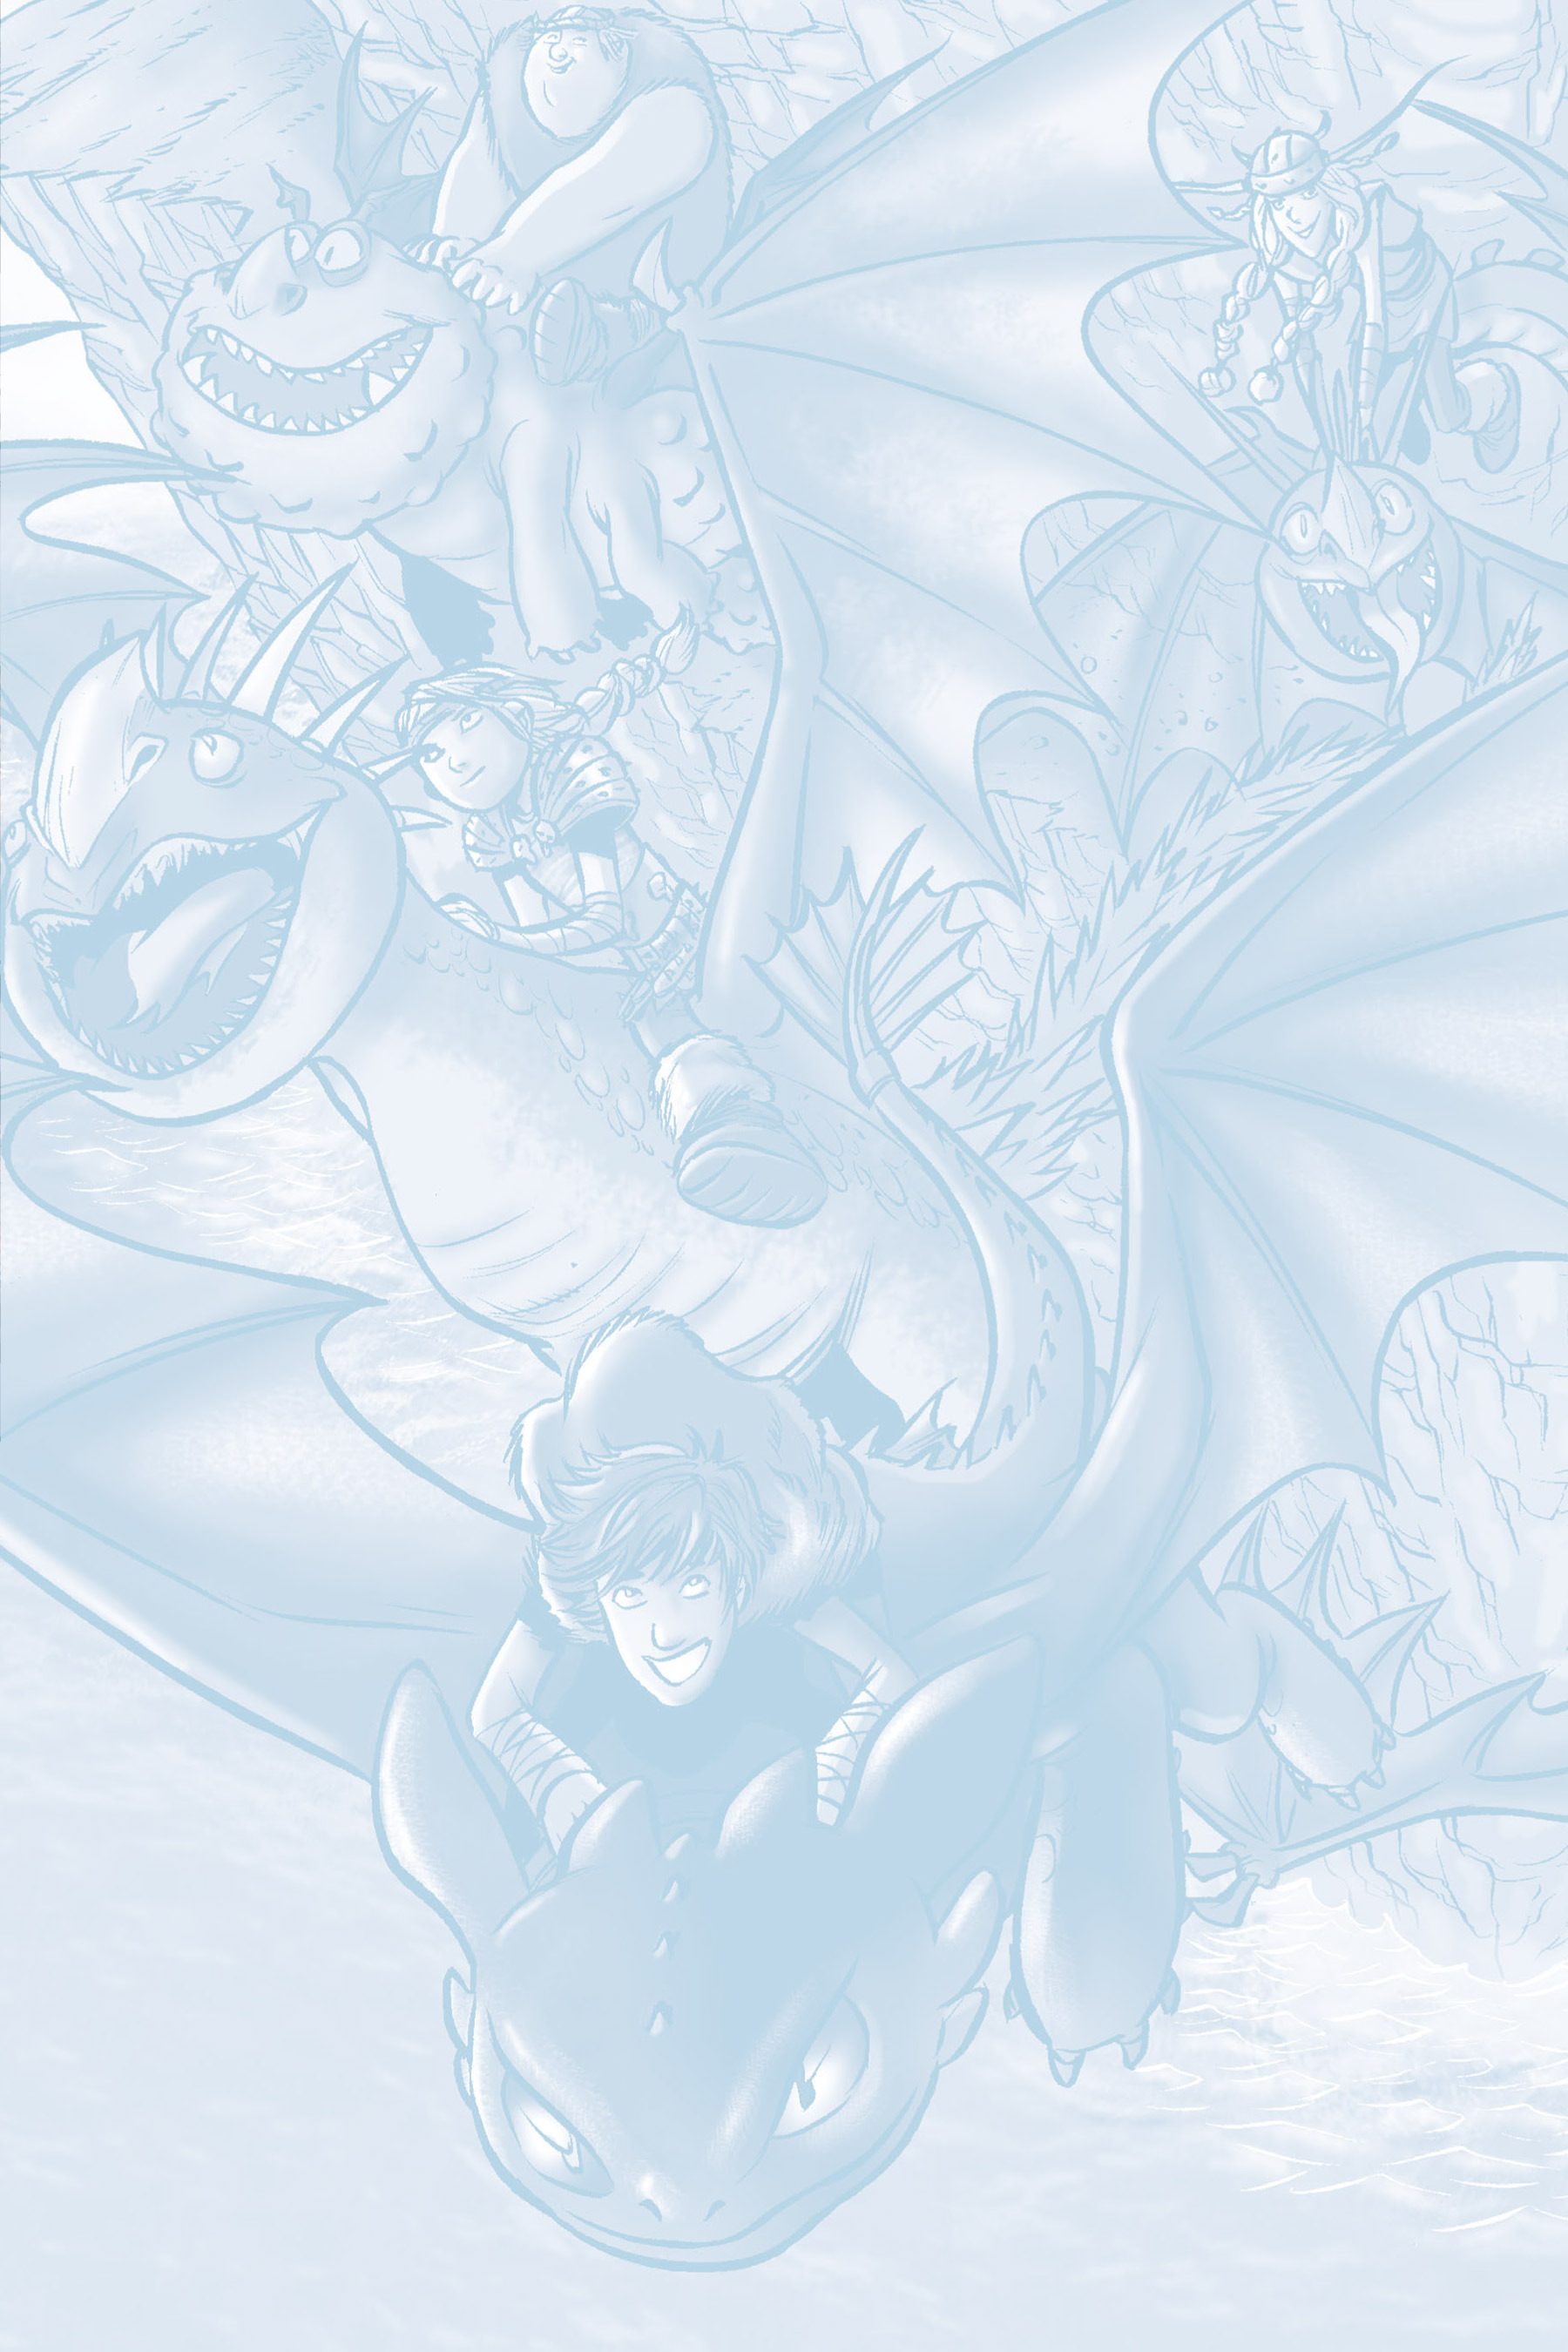 Read online DreamWorks Dragons: Riders of Berk comic -  Issue #2 - 19